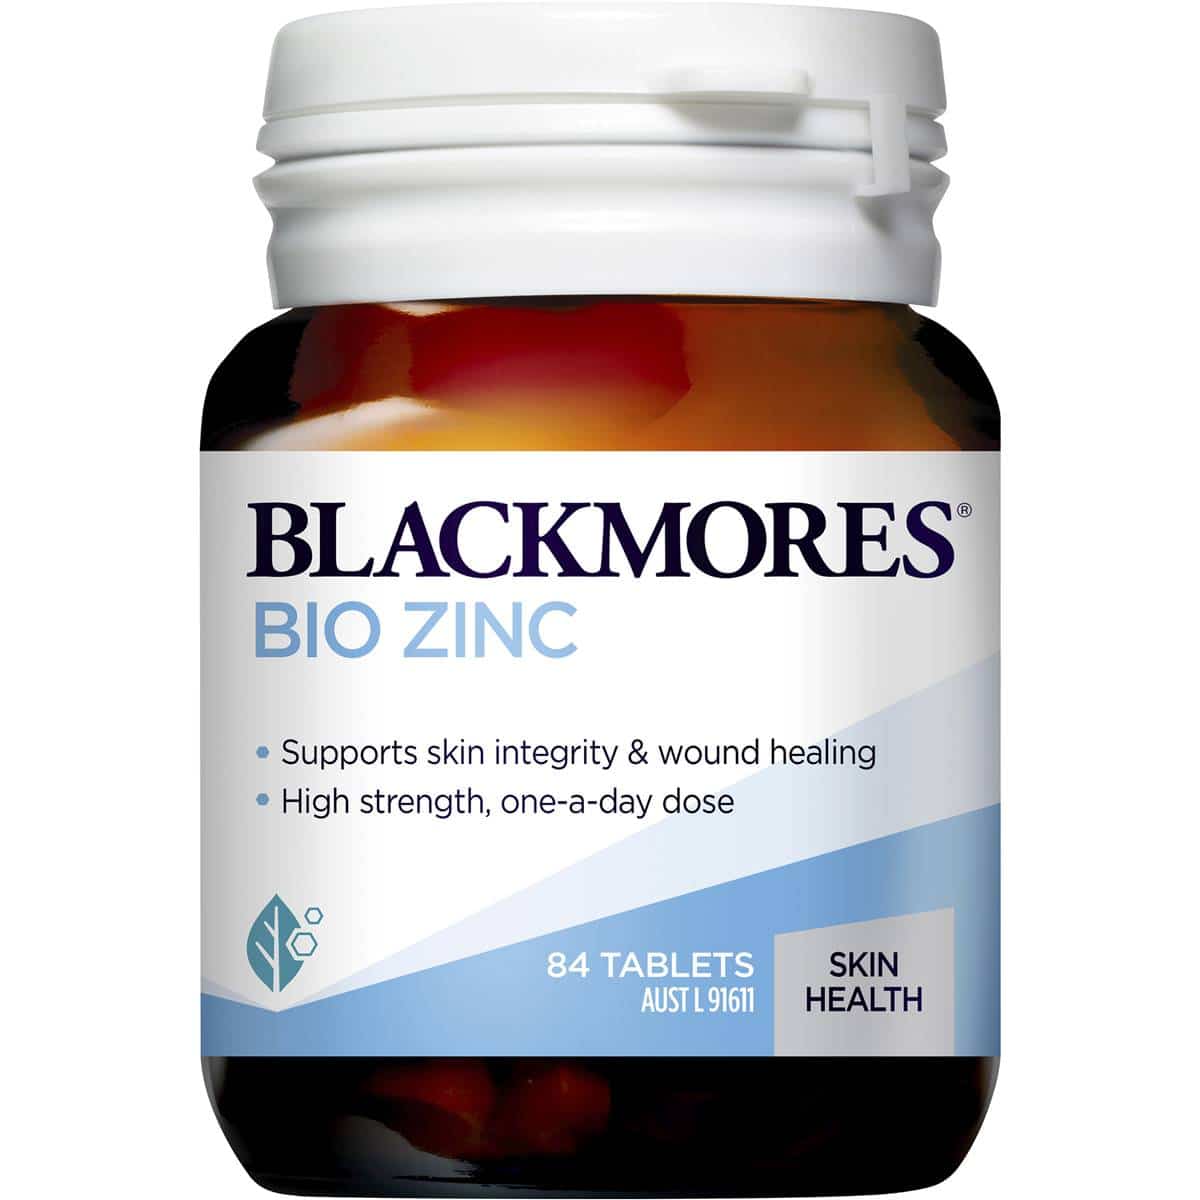 Blackmores Bio Zinc Skin Health Tablets 84pk